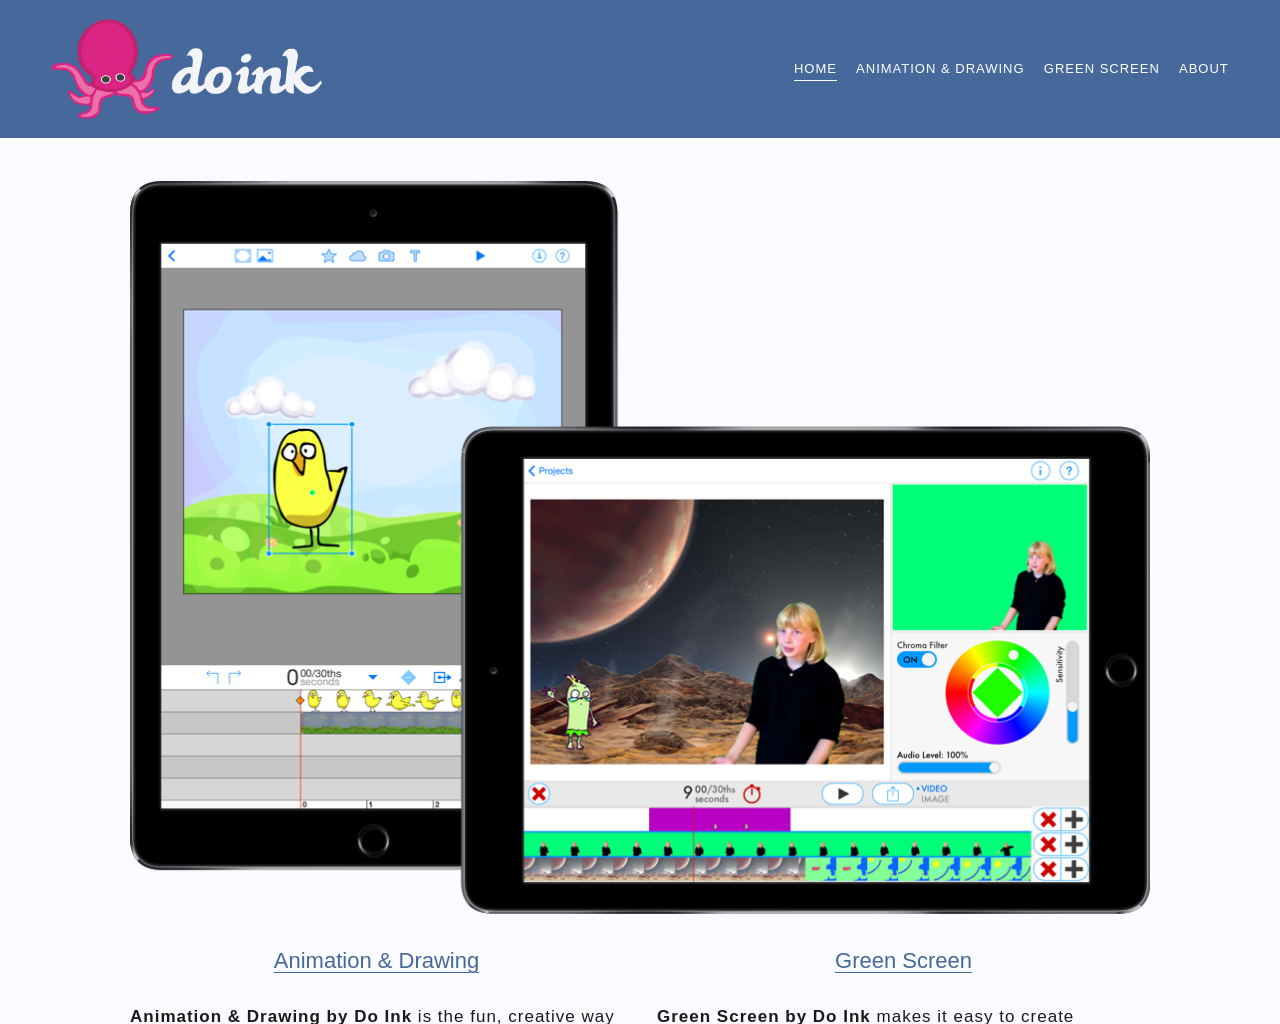 doink.com